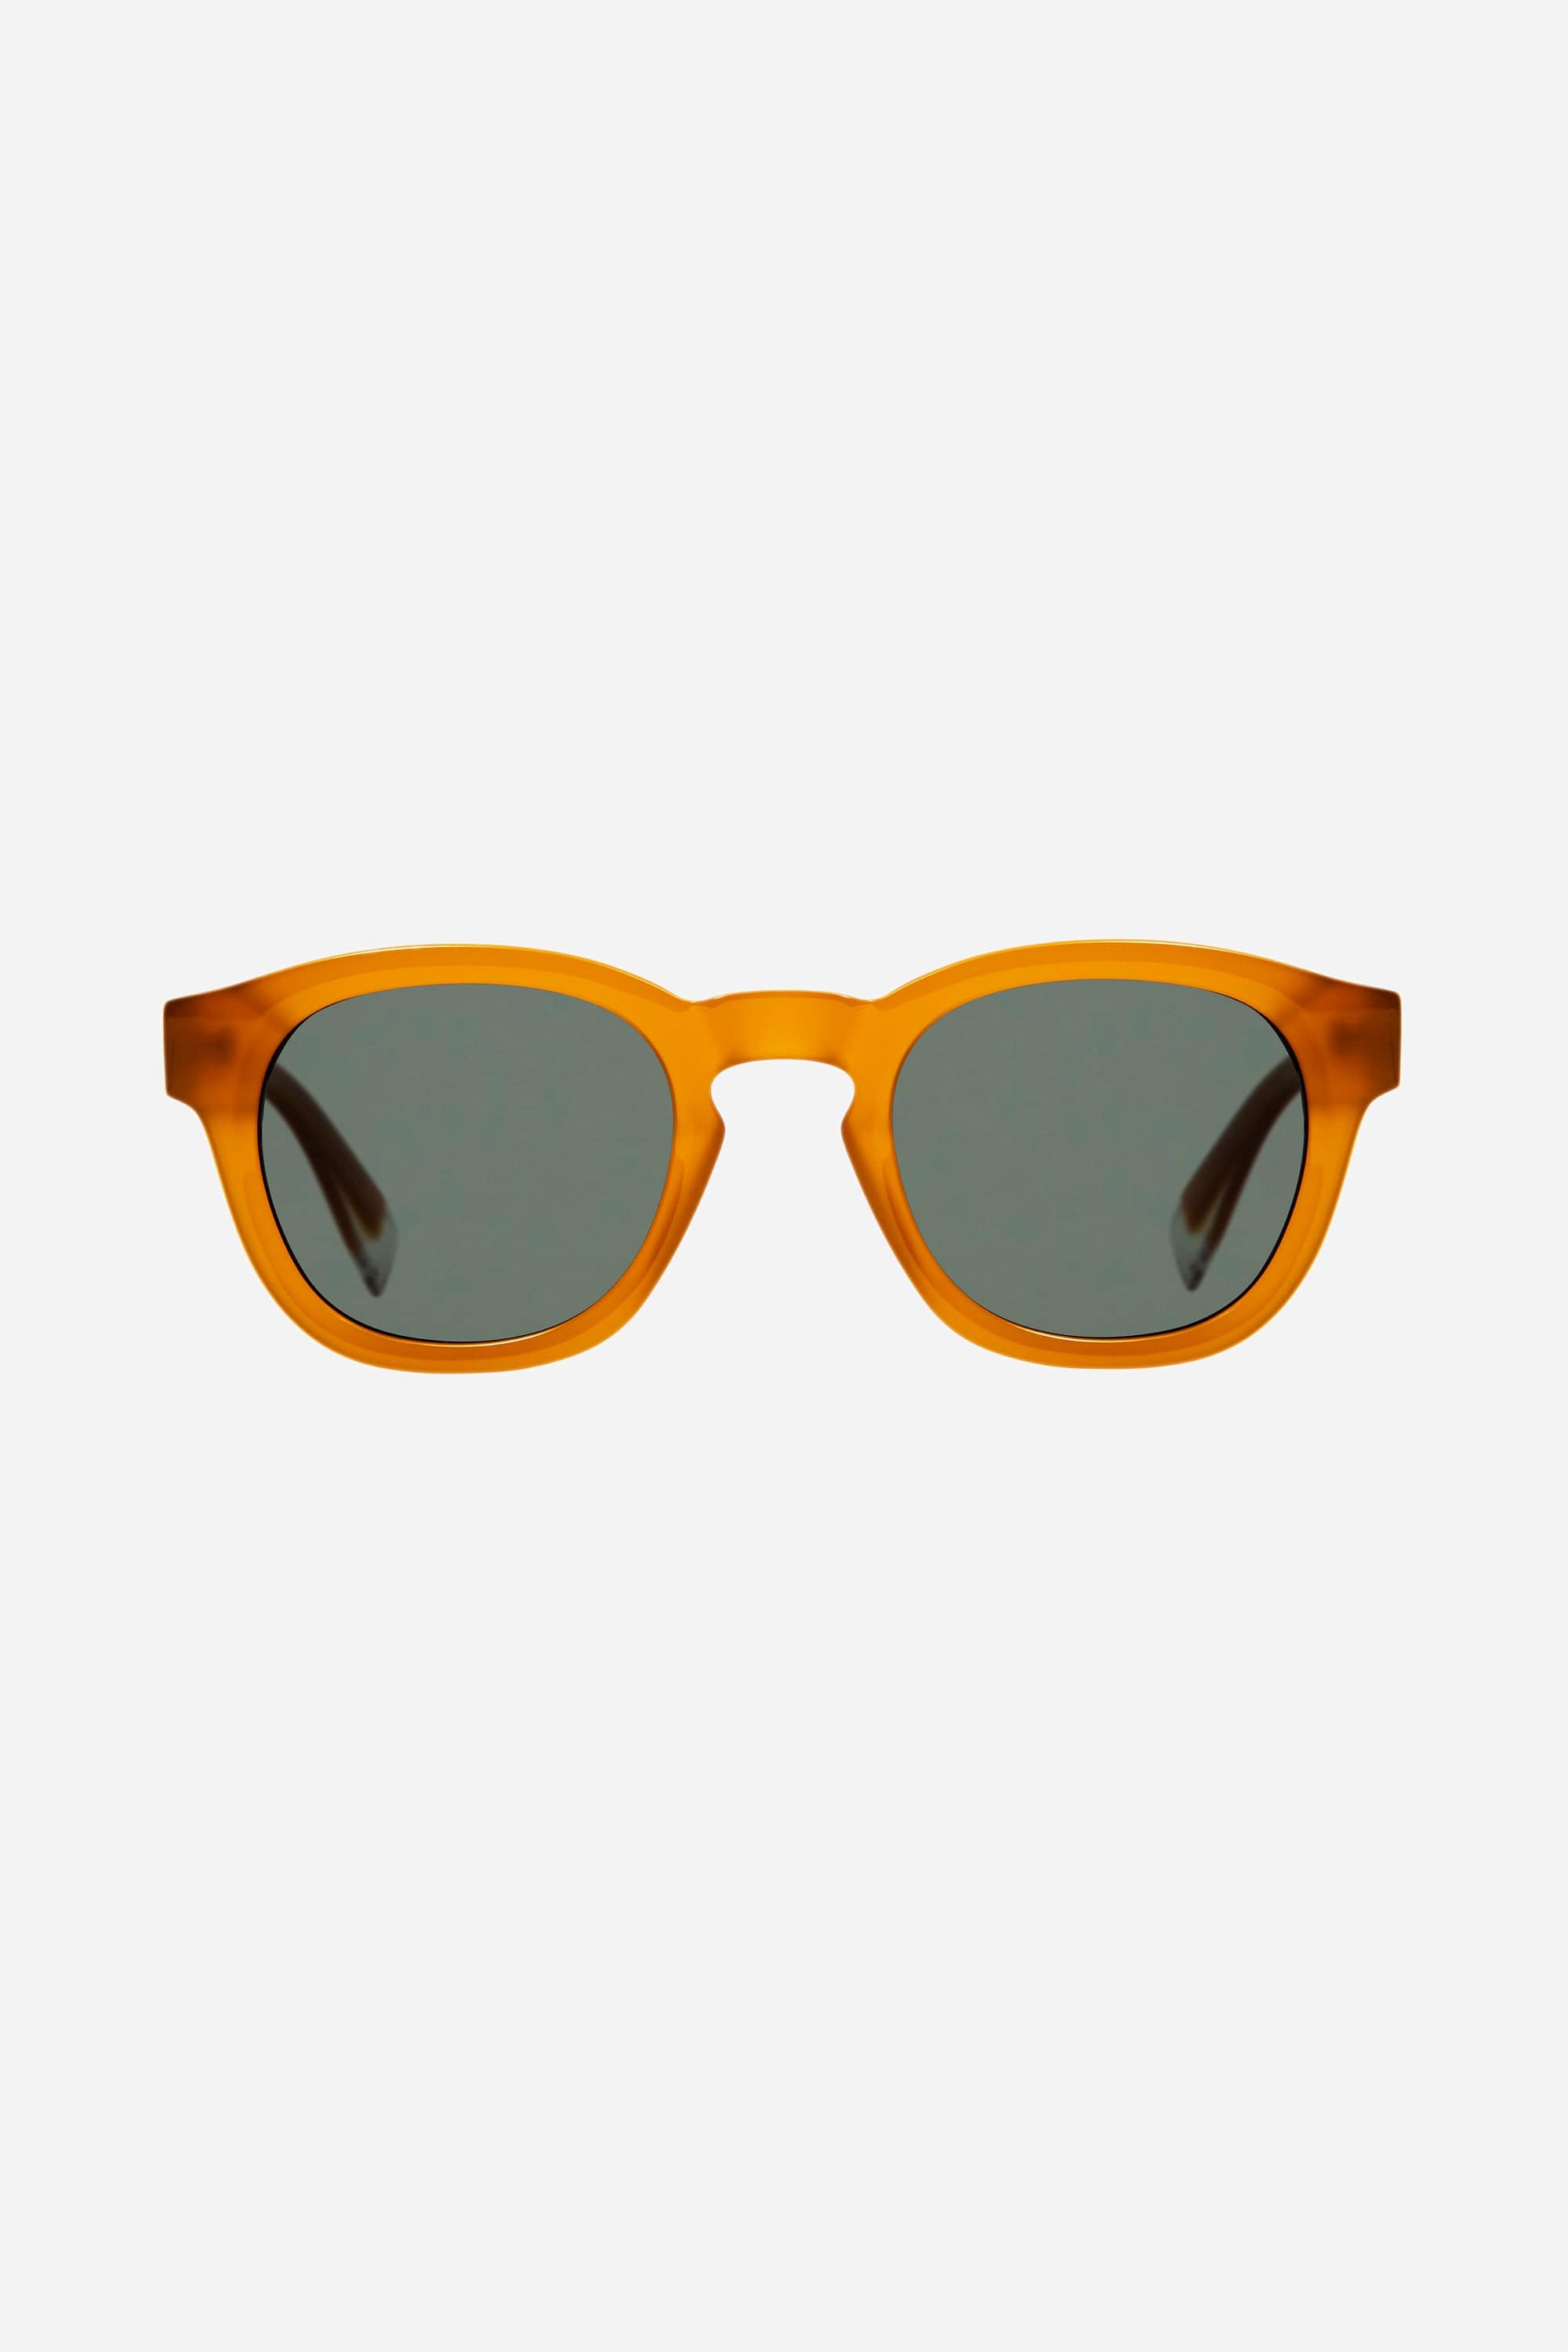 Gigi Studios round yellow sunglasses - Eyewear Club